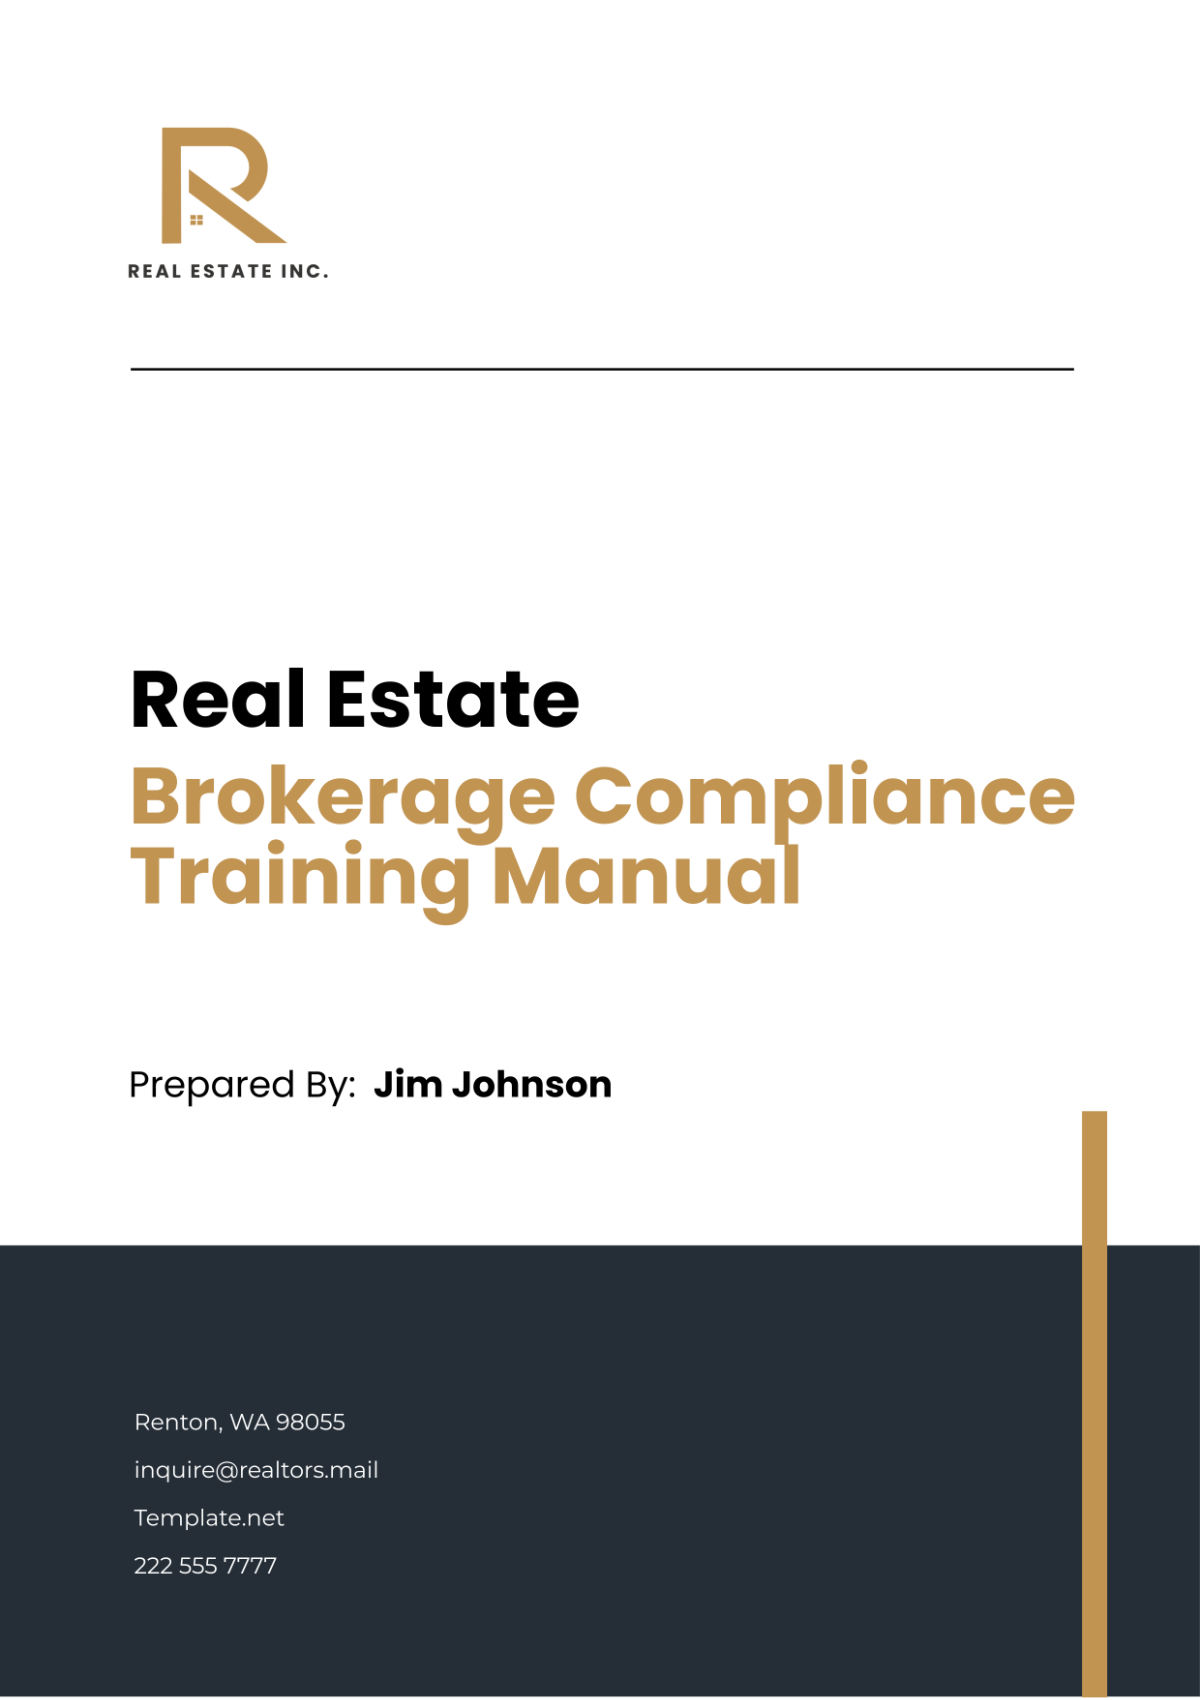 Real Estate Brokerage Compliance Training Manual Template